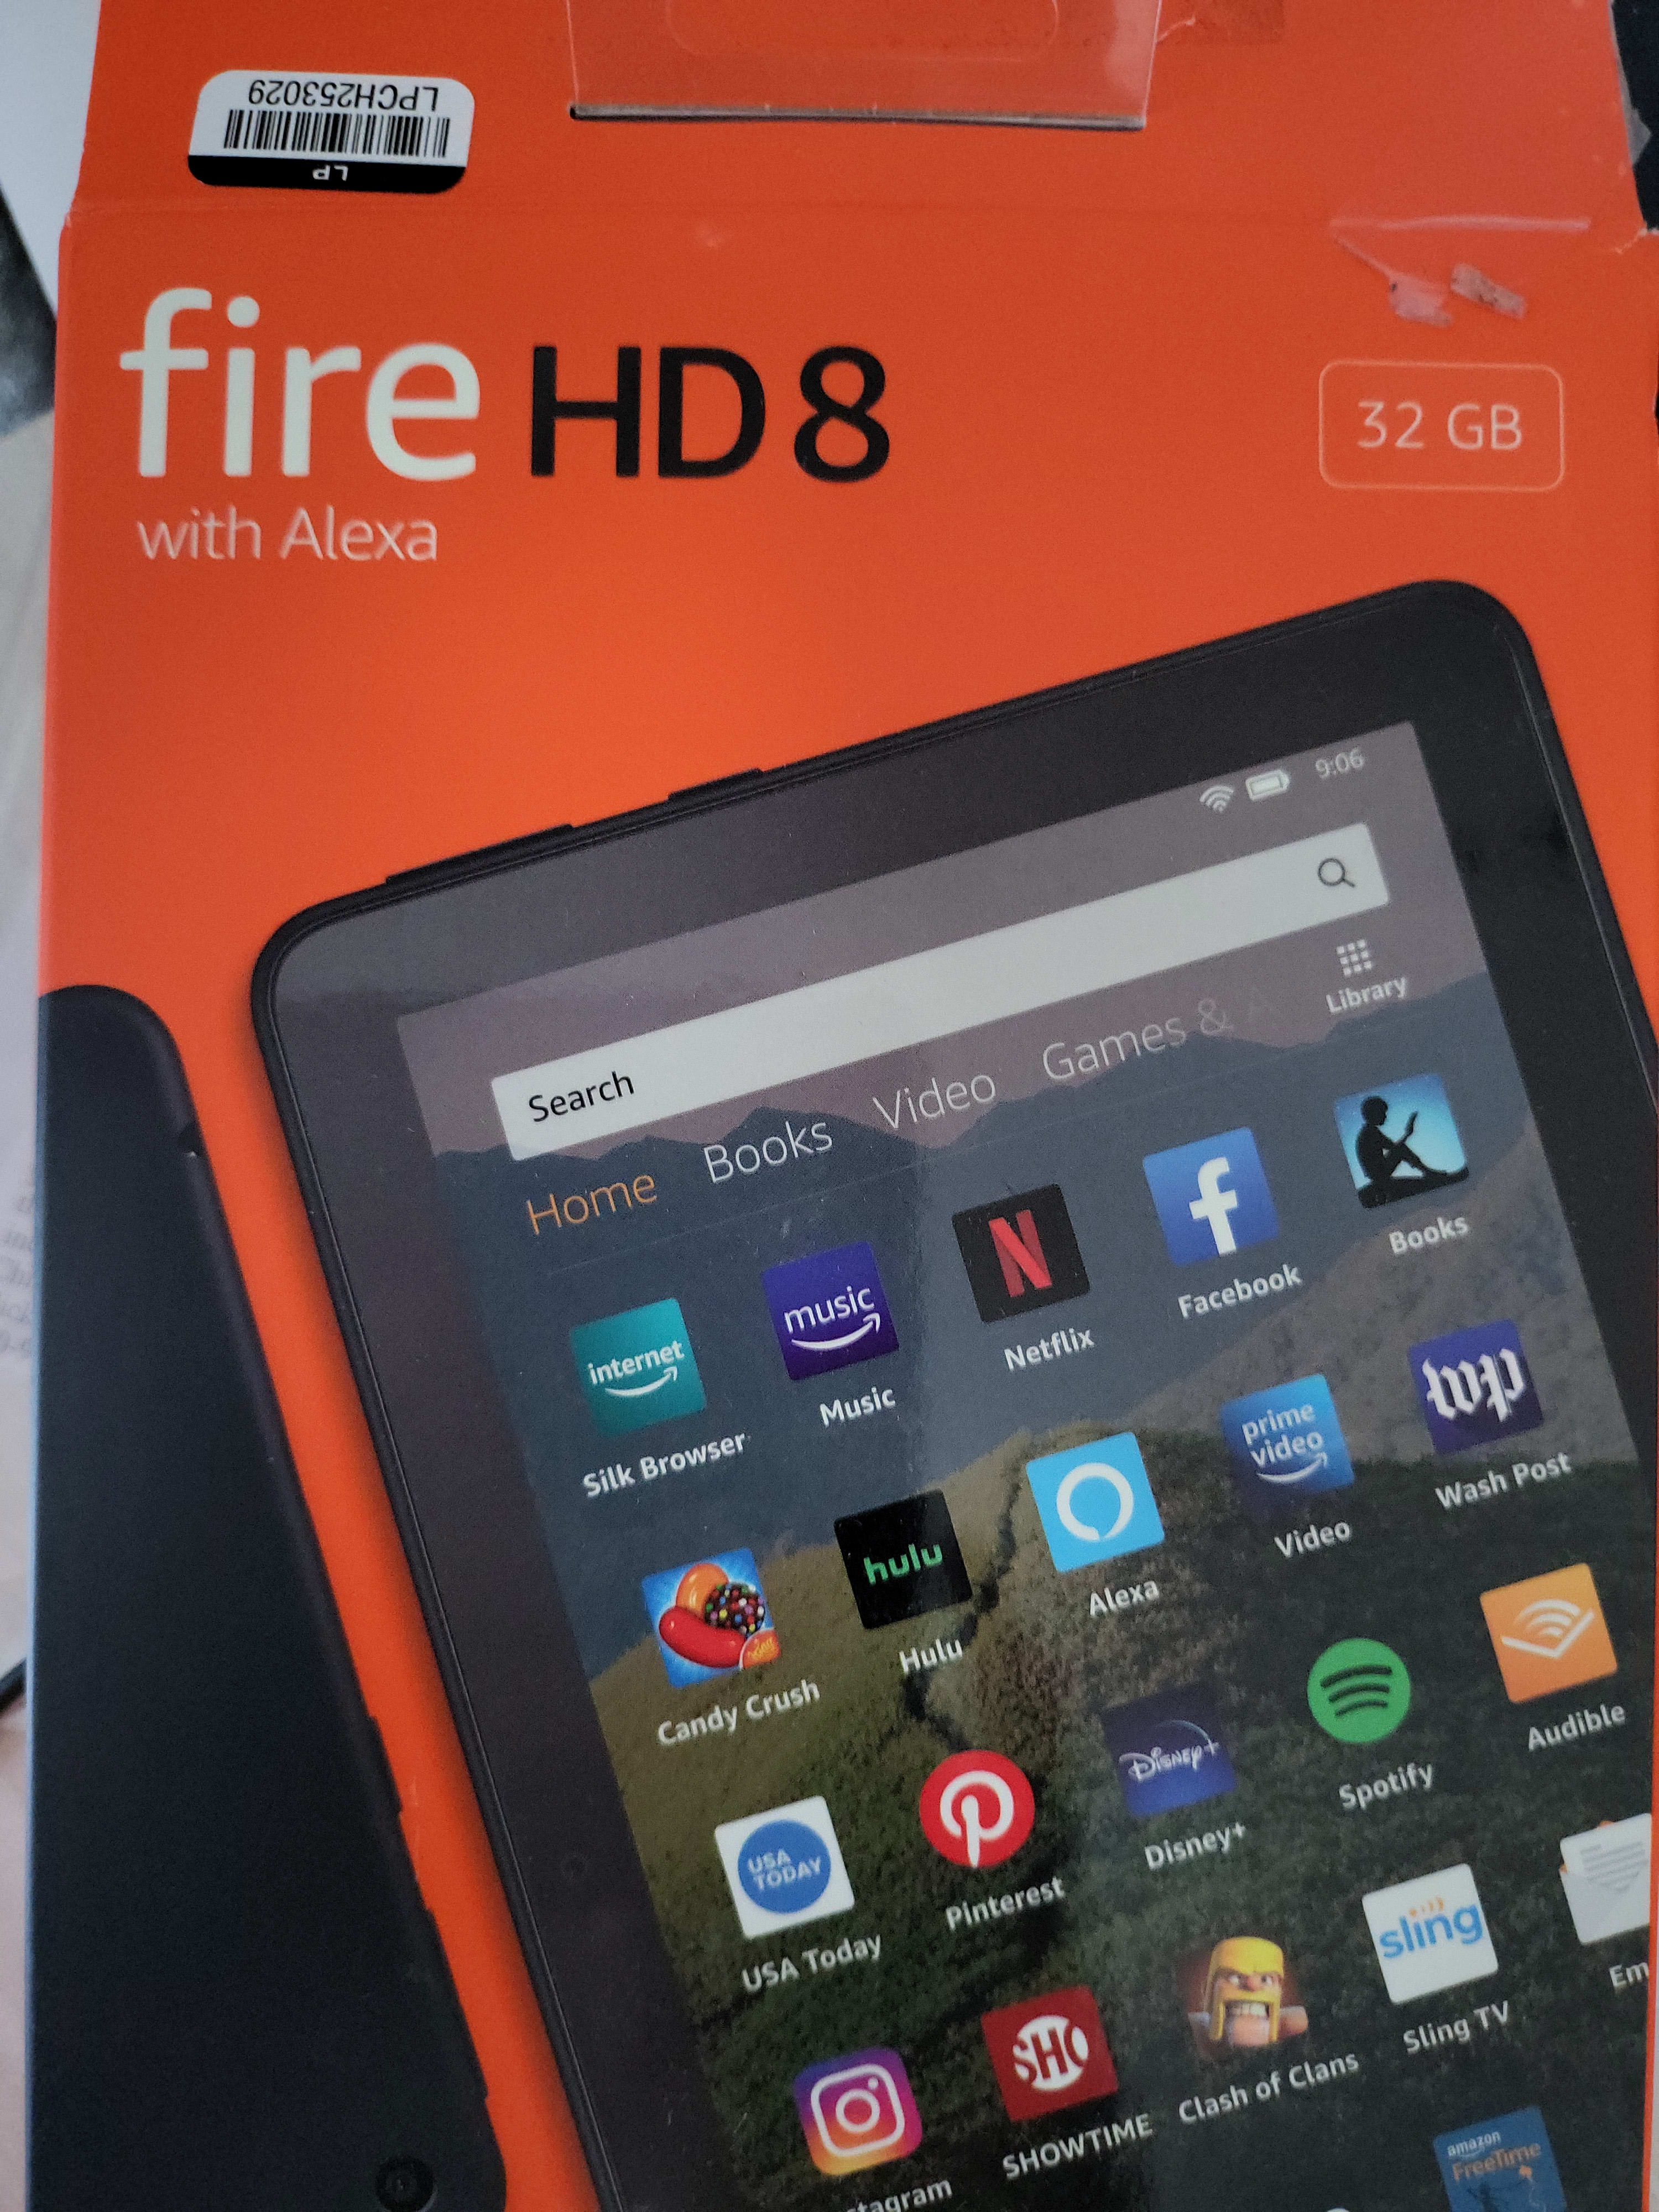 Fire HD 8 32GB Black Tablet with Alexa - 2020